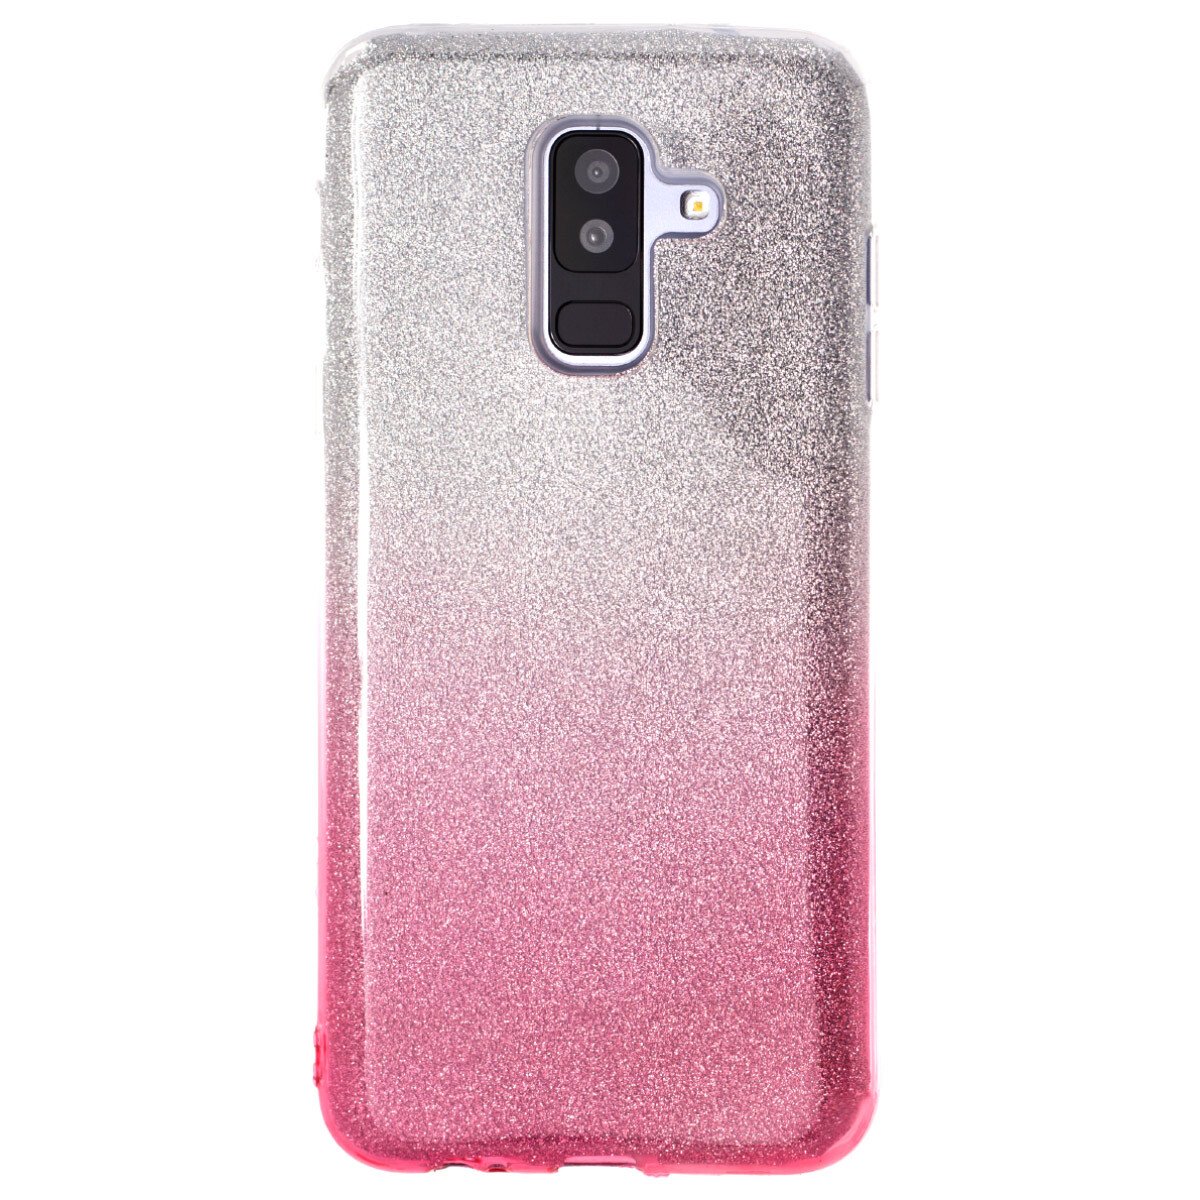 Husa Fashion Samsung Galaxy A6 Plus 2018, Contakt Glitter Roz thumb